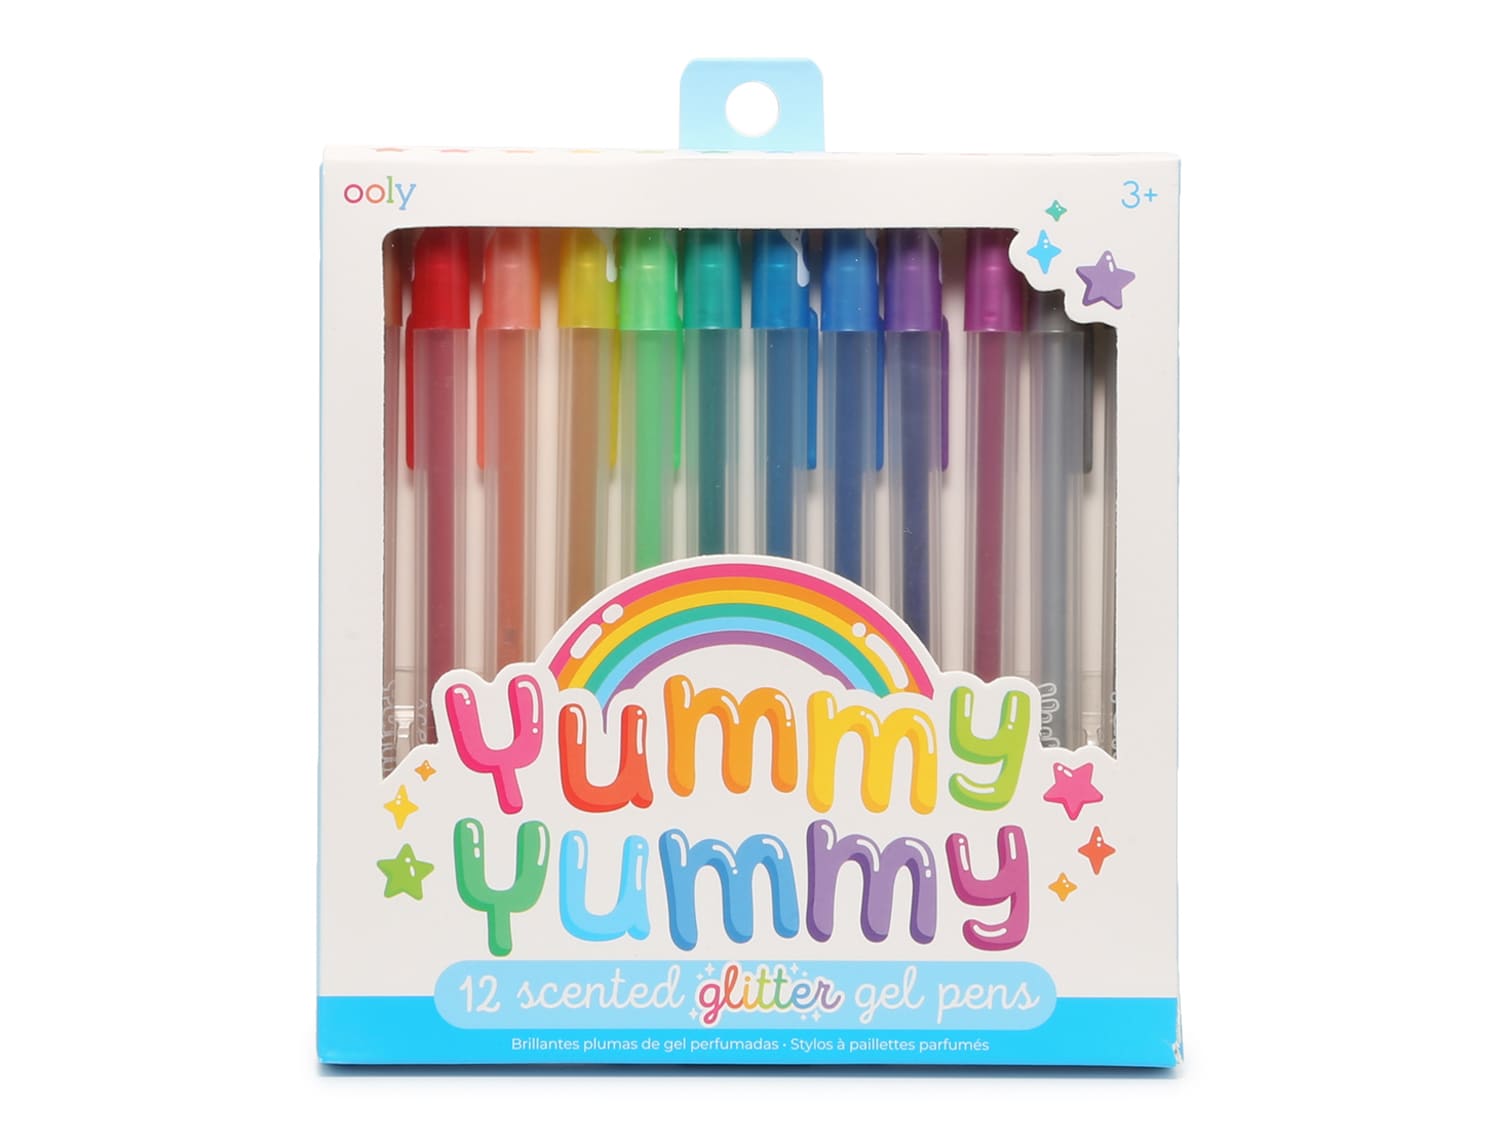 Yummy Yummy Scented Glitter Gel Pens 2.0 - OOLY